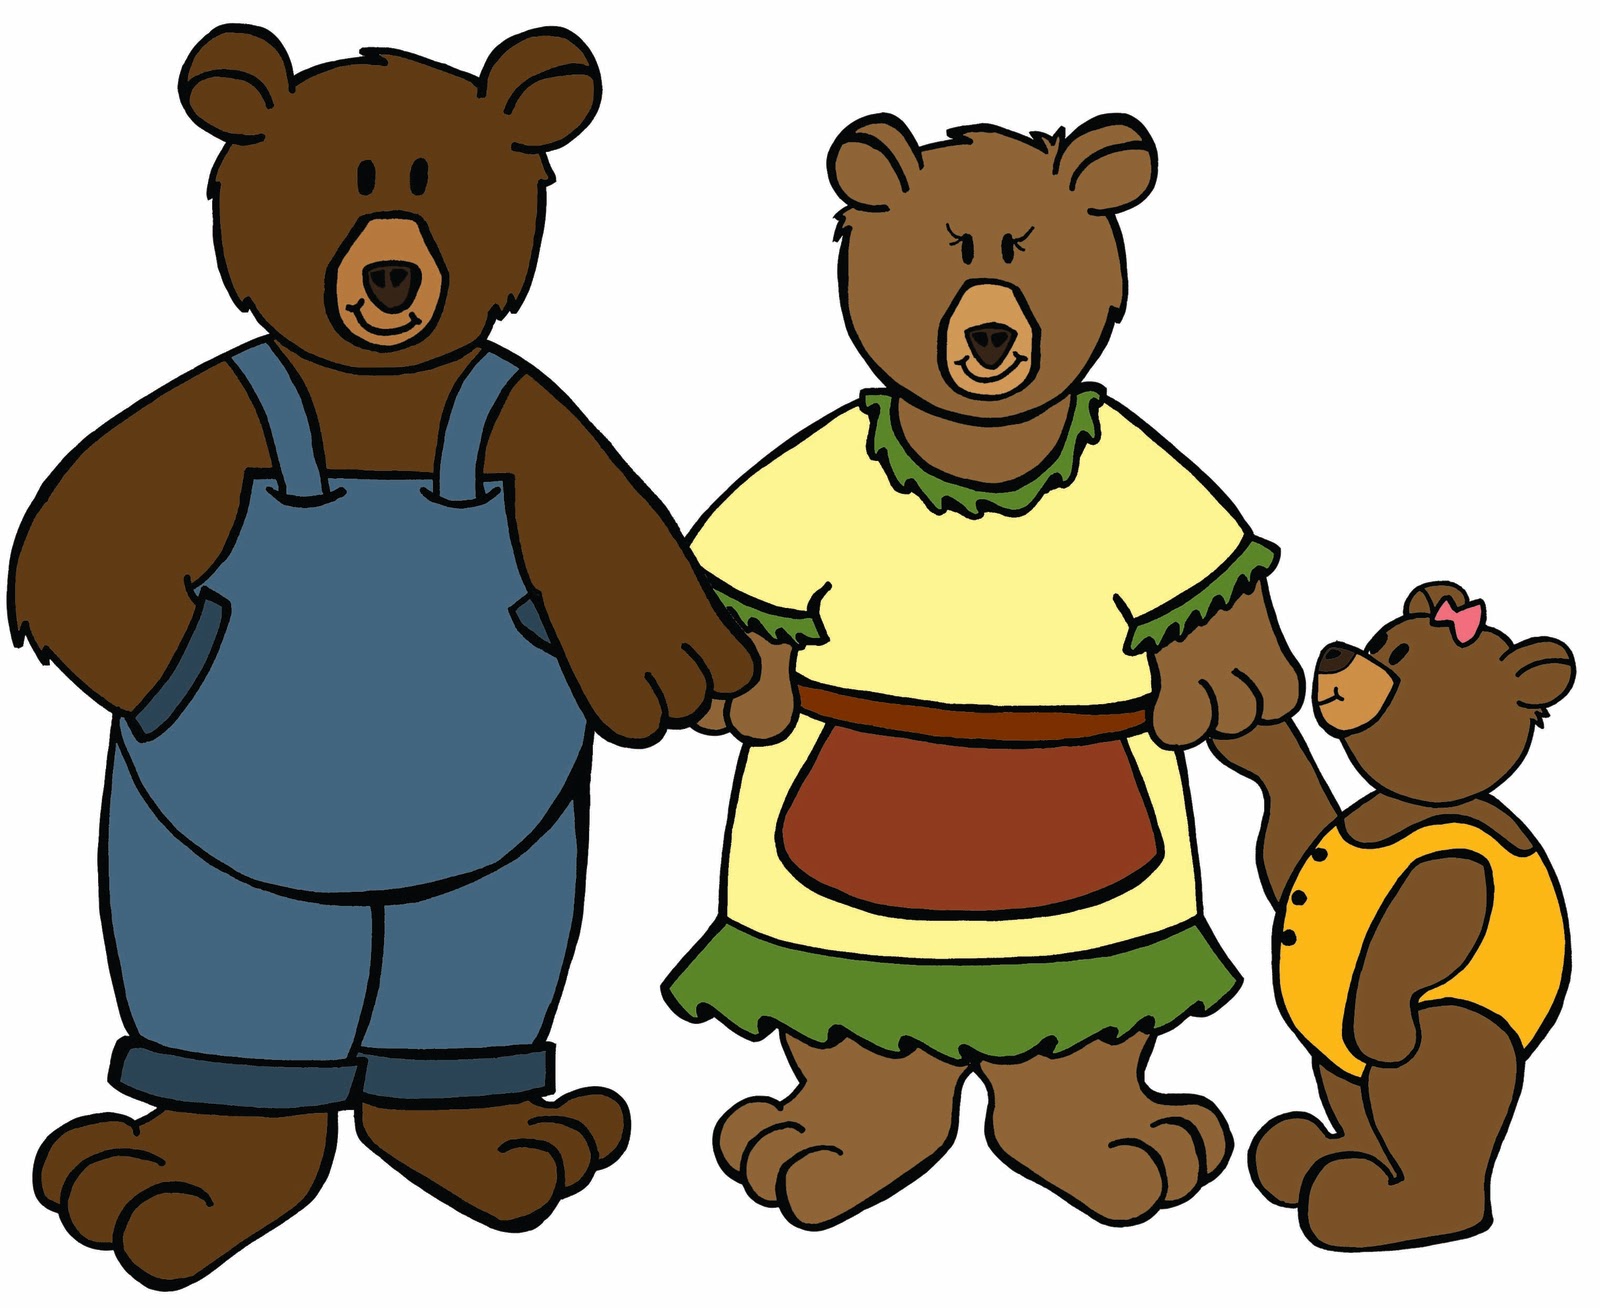 Kindergarten Crayons: Meet the Bear Family